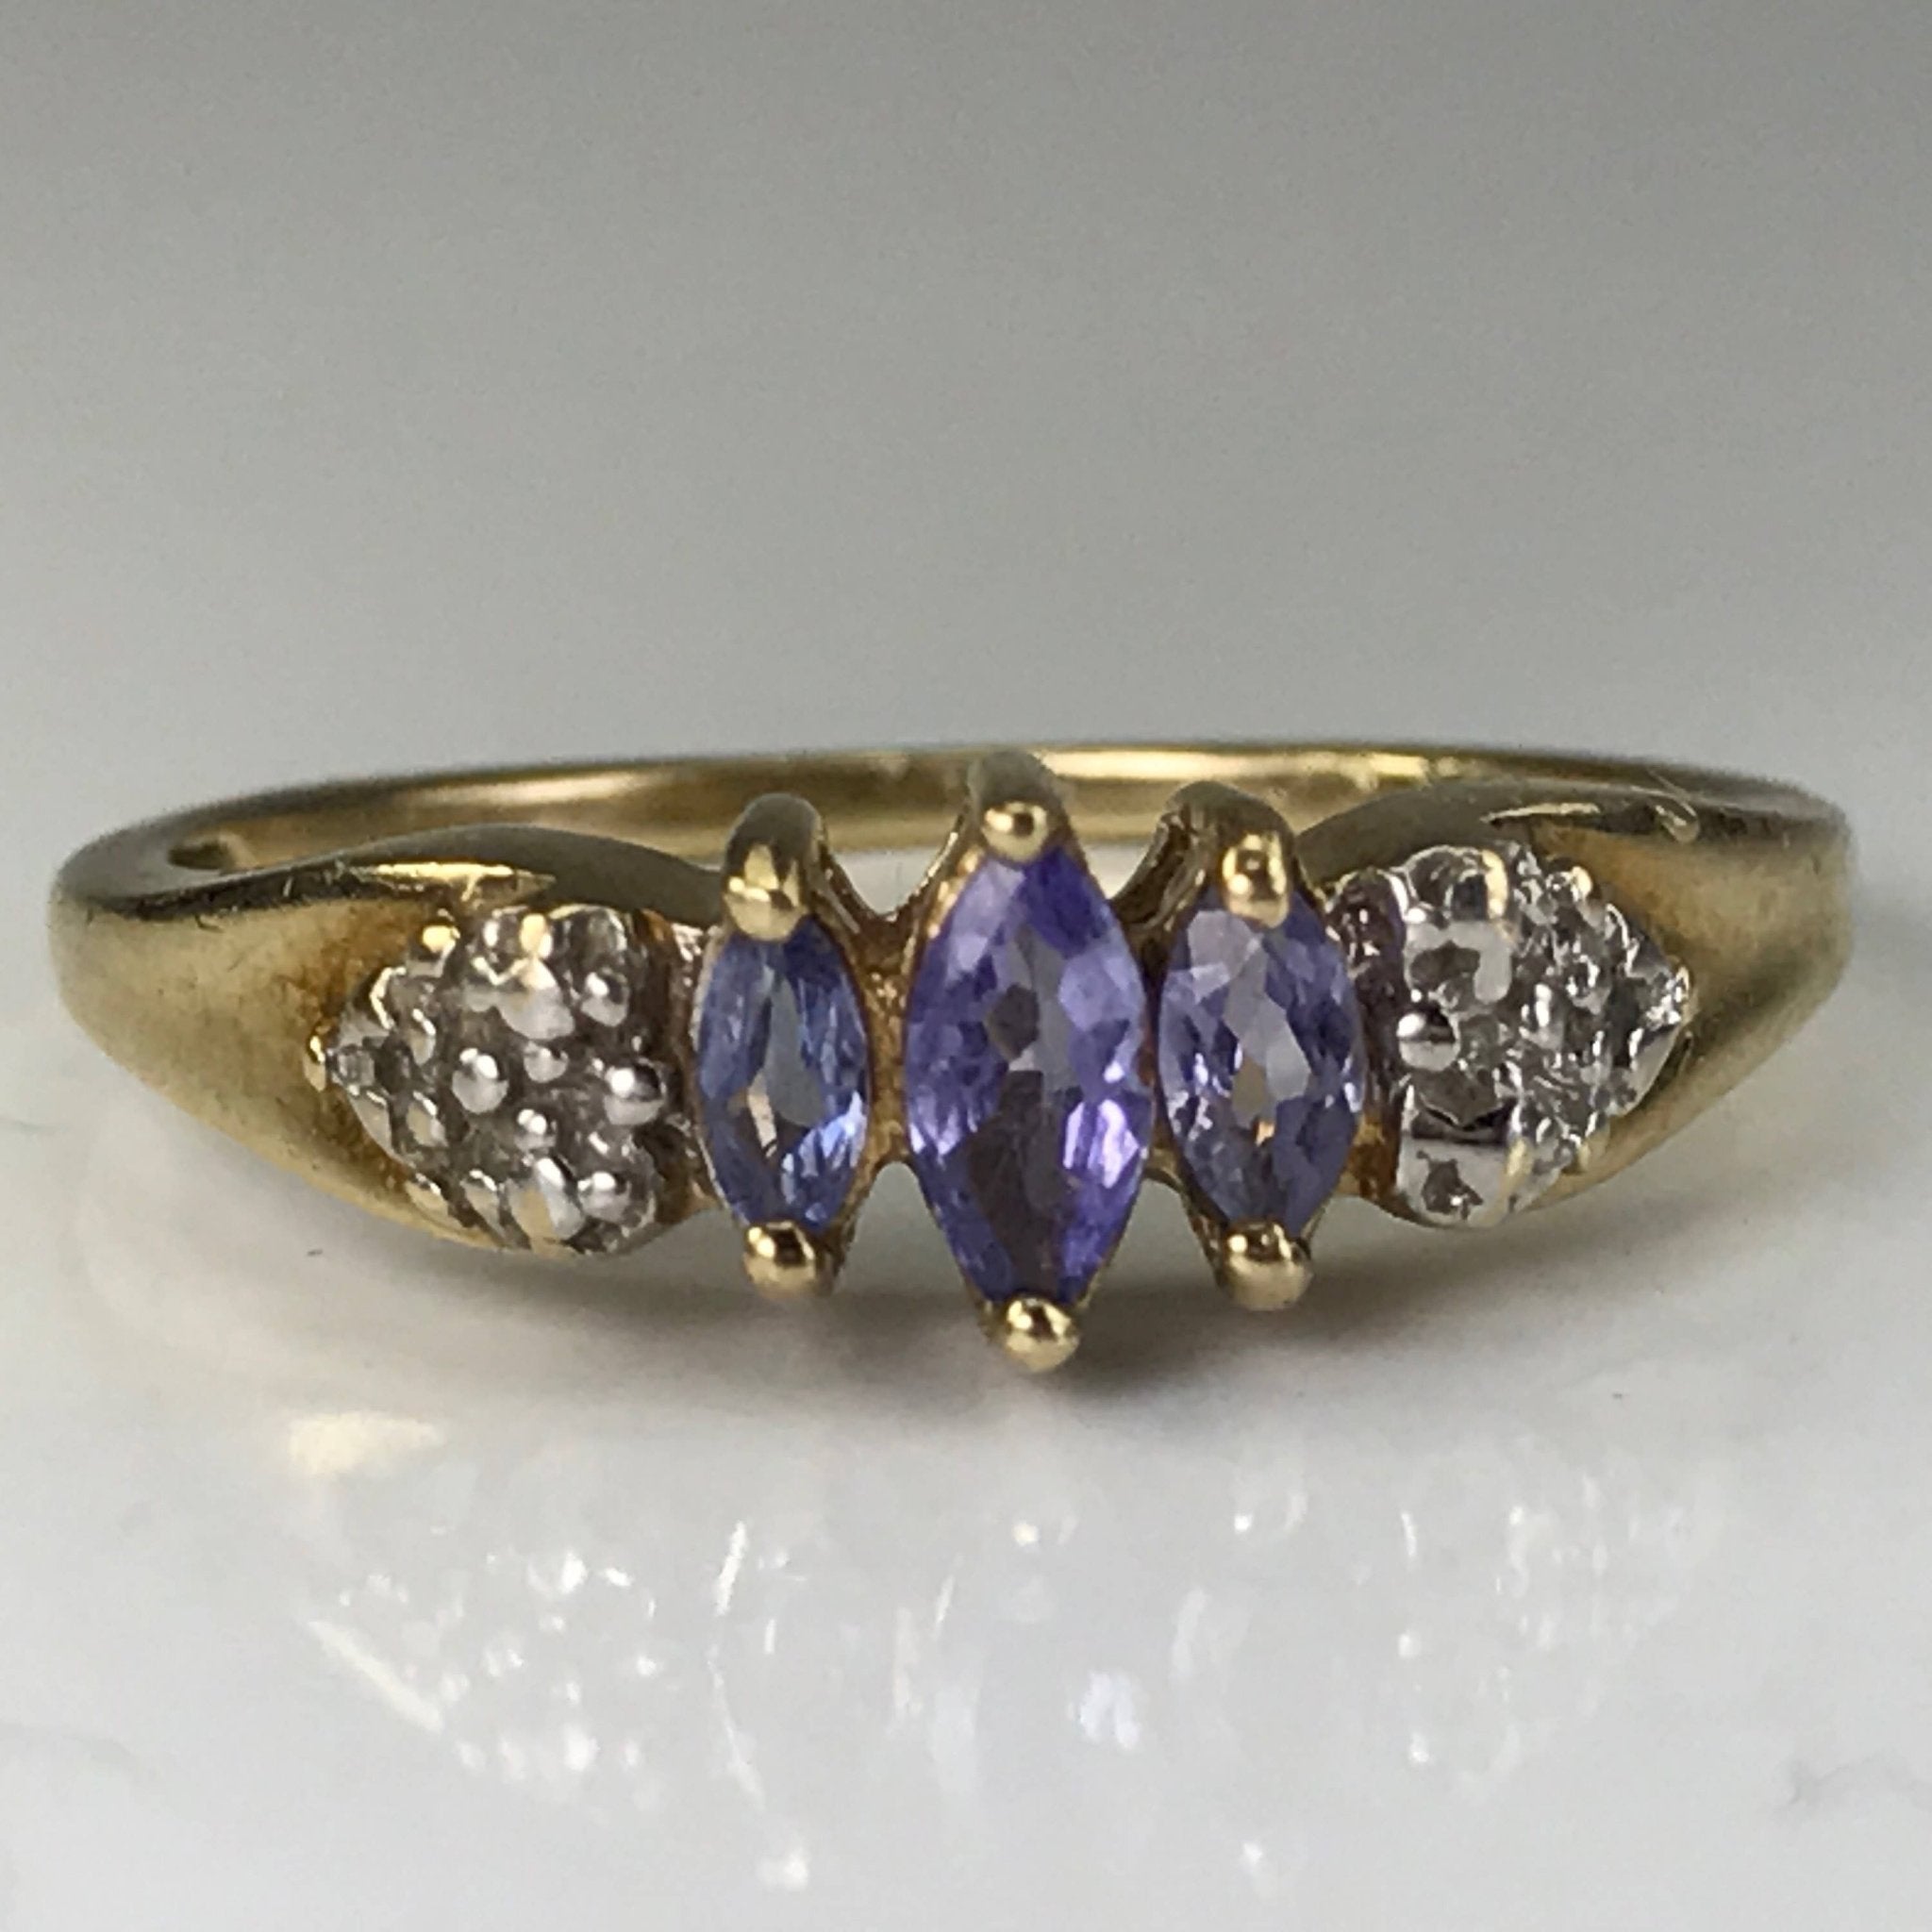 Vintage Tanzanite and Diamond Ring - 14K Yellow Gold Gemstone Band -  December Birthstone Jewelry Gift